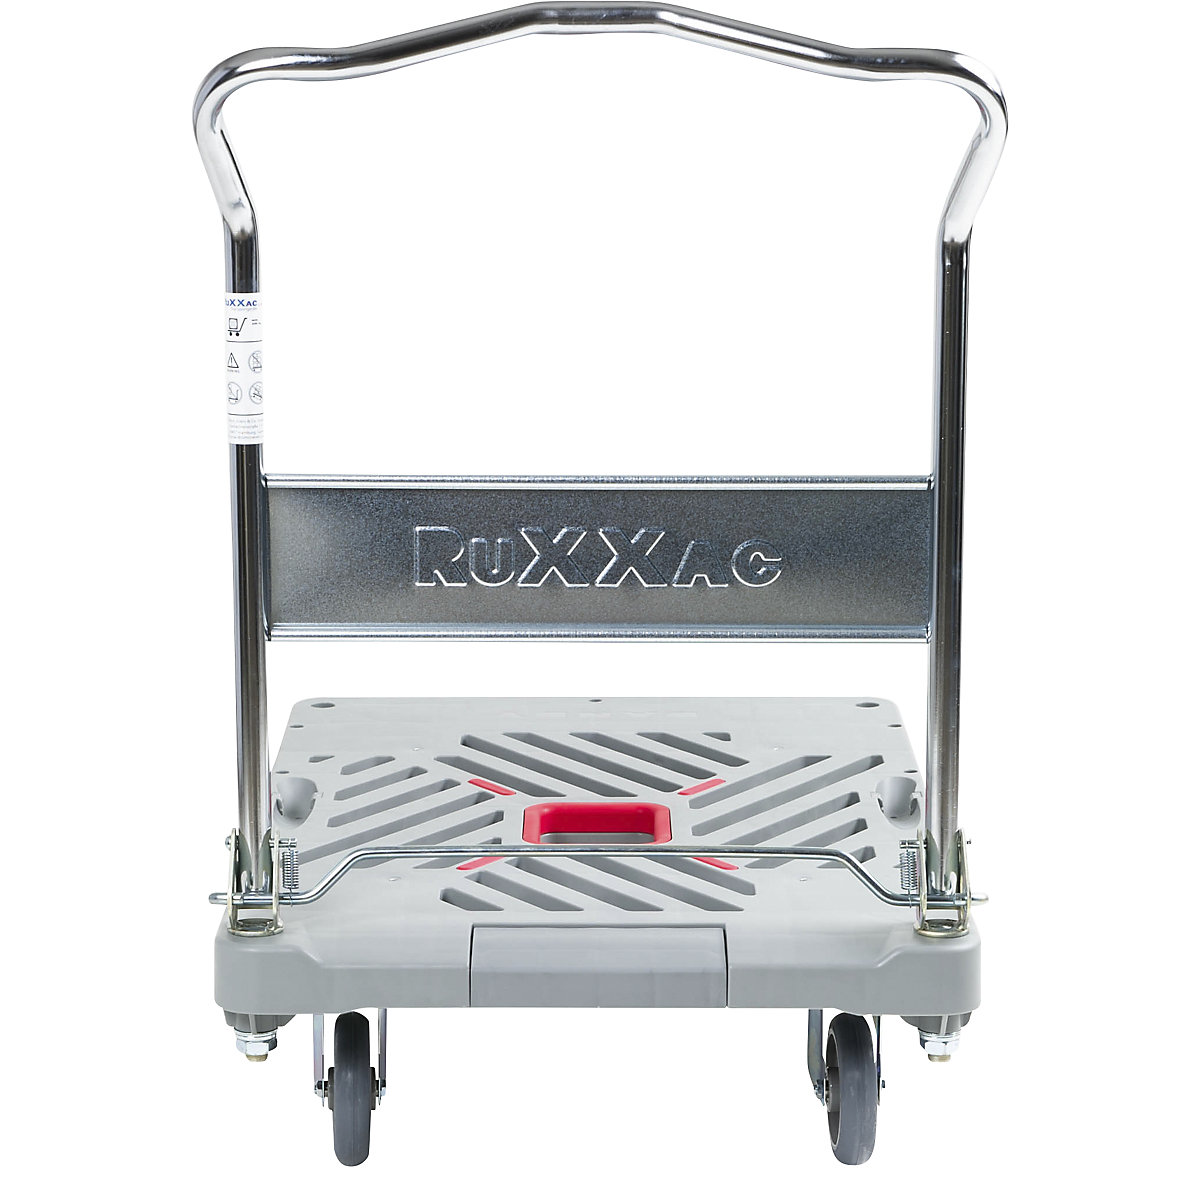 Ploski voziček RuXXac Dandy XL (Slika izdelka 3)-2